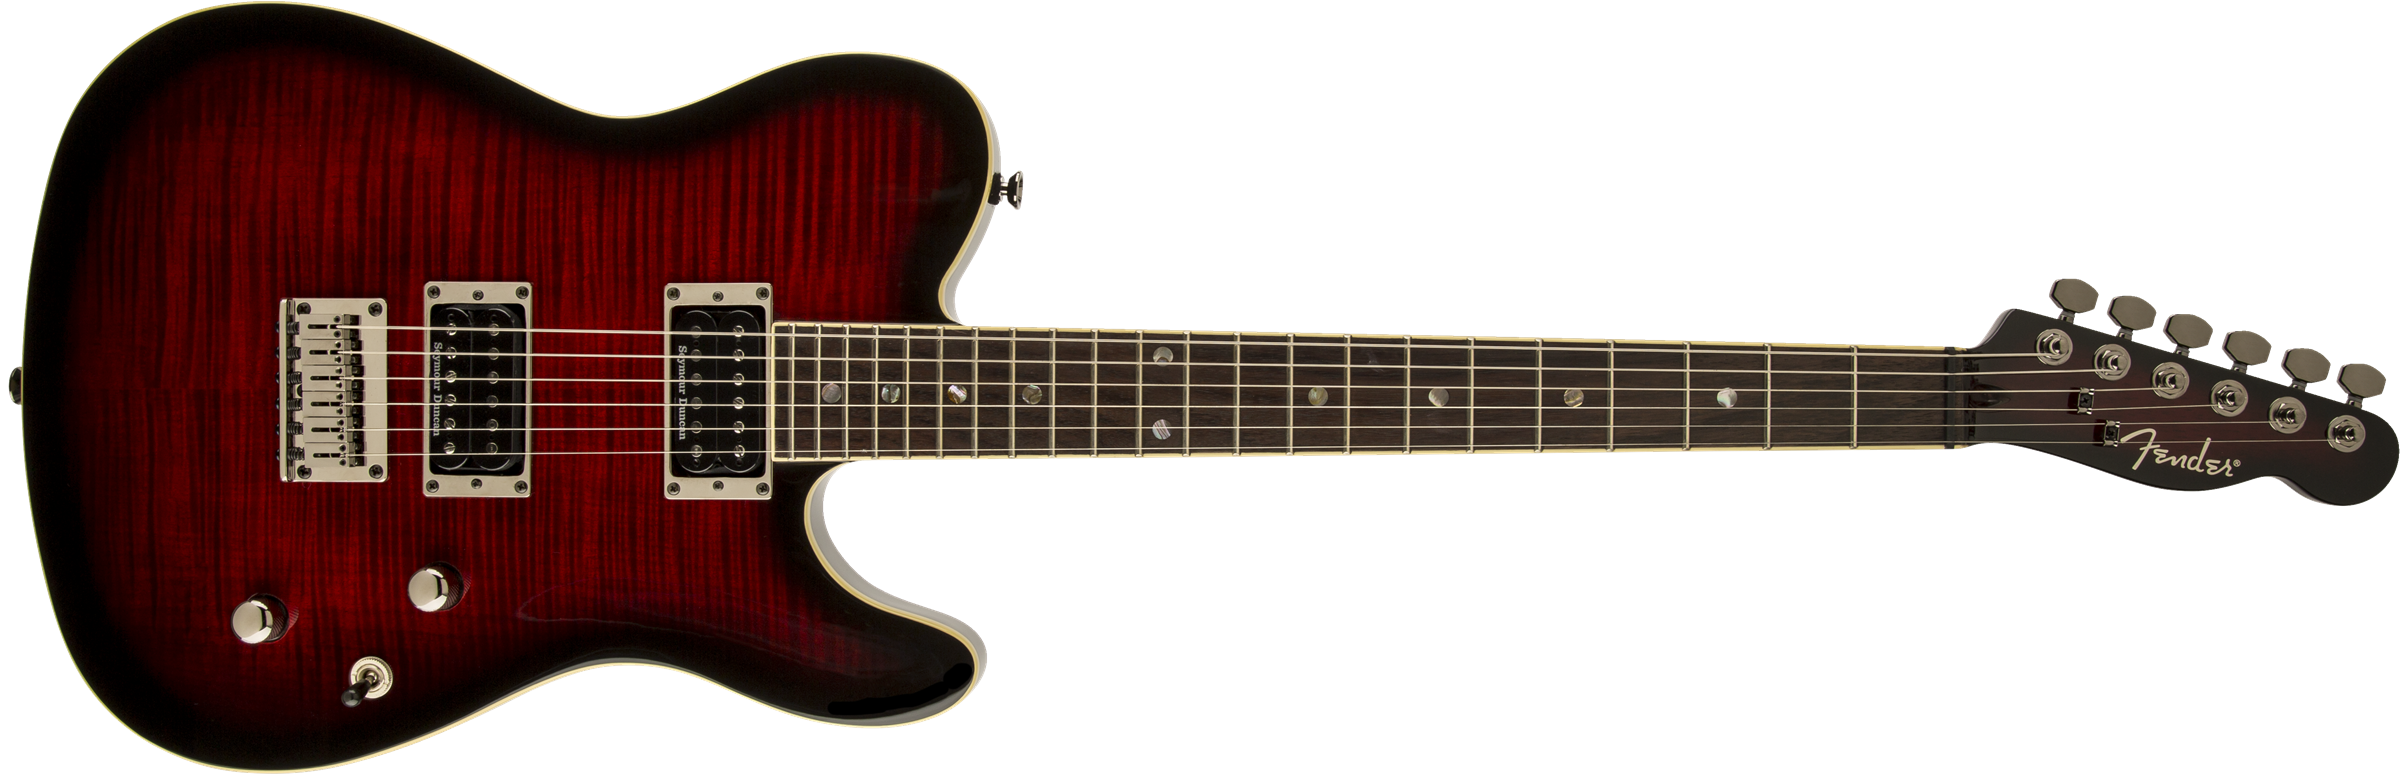 Fender Telecaster Korean Special Edition Custom Fmt (lau) - Black Cherry Burst - Tel shape electric guitar - Variation 1